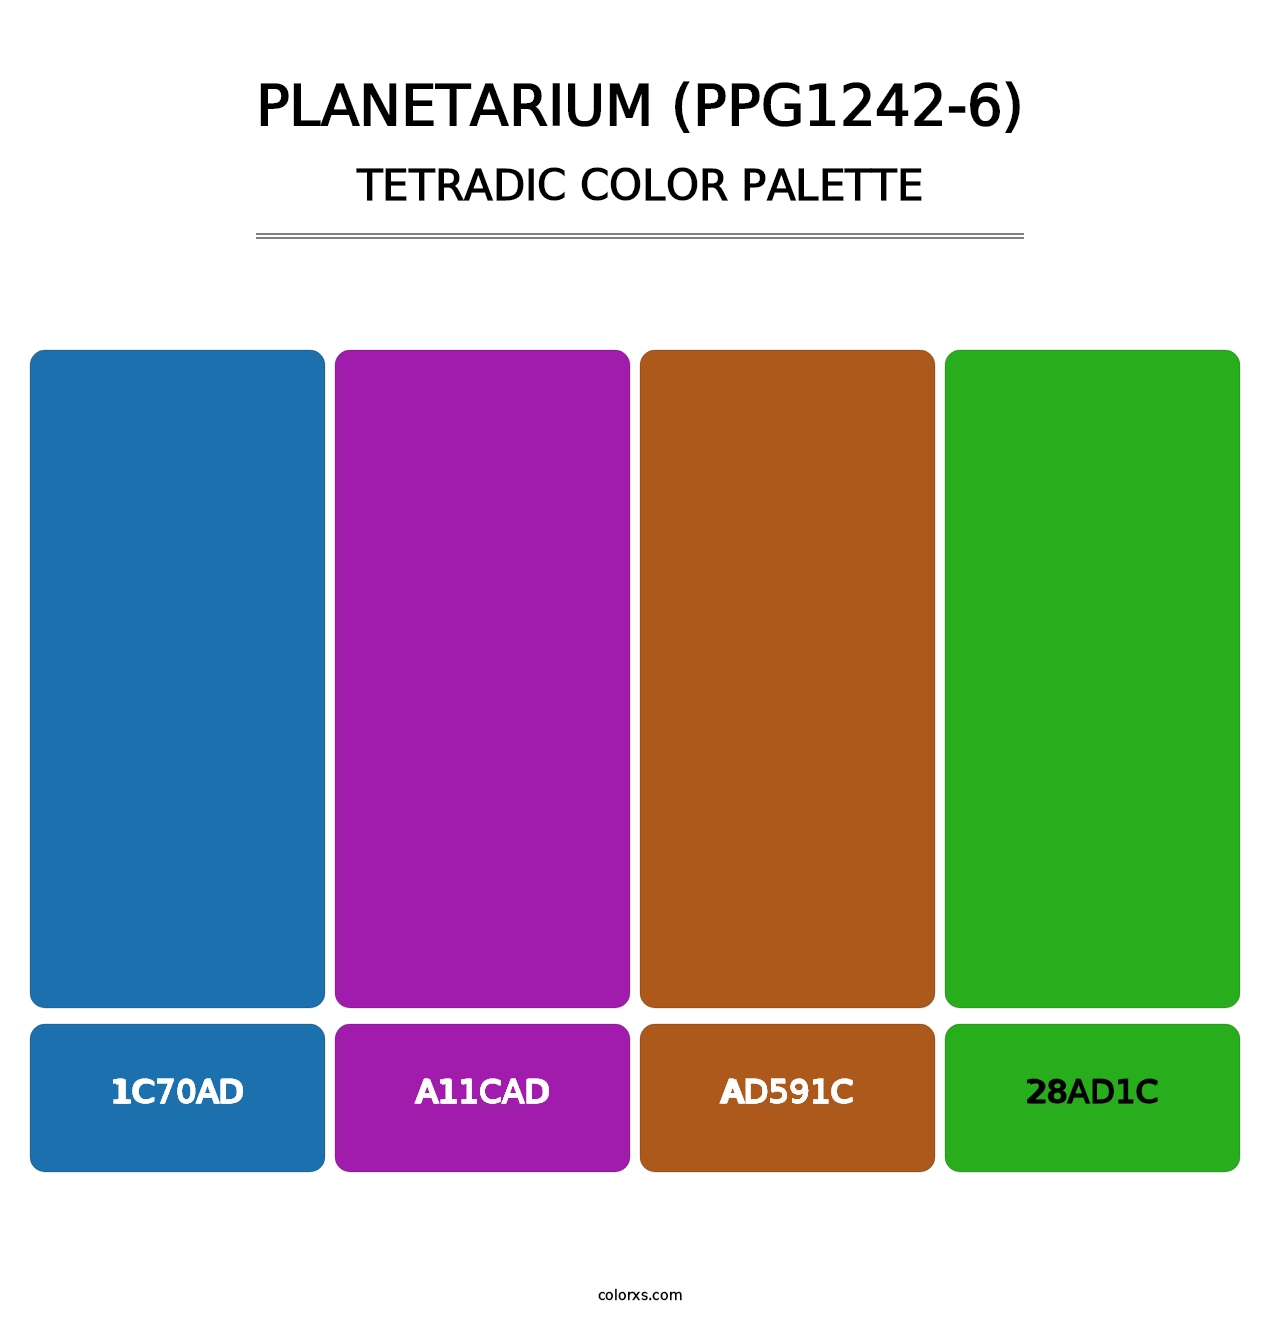 Planetarium (PPG1242-6) - Tetradic Color Palette